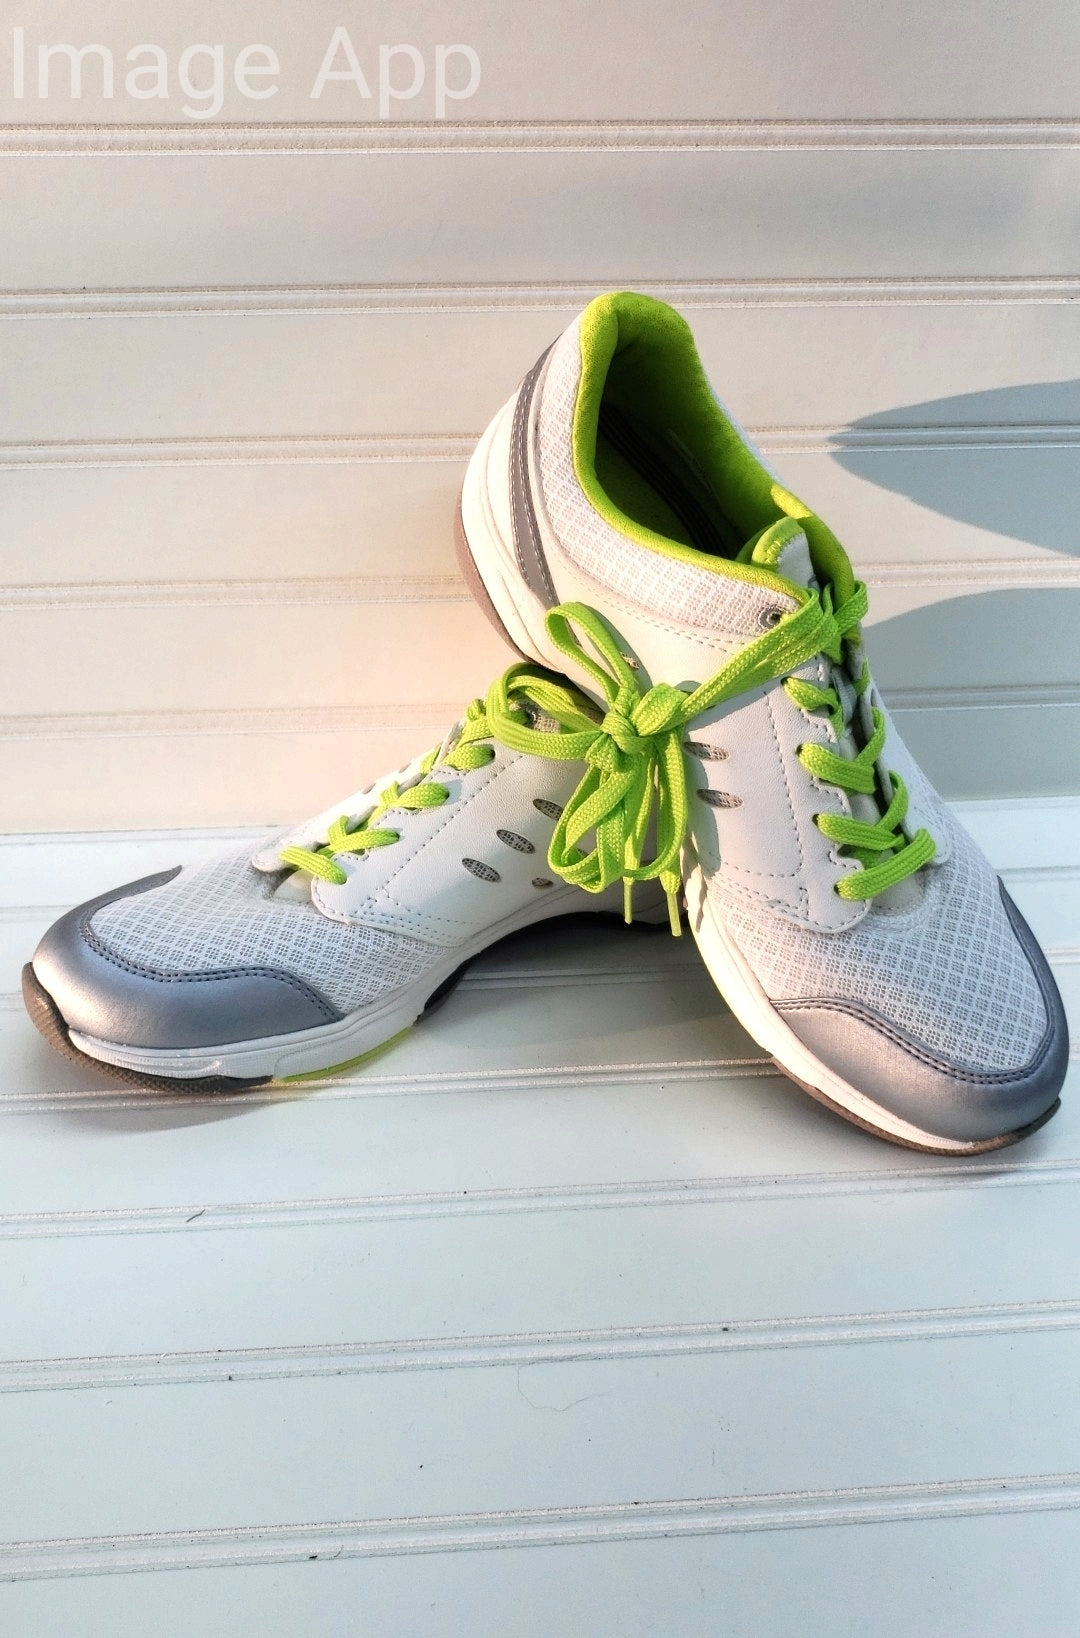 Vionic Motion Venture Lace Up Walking Athletic Shoes 8.5 1F